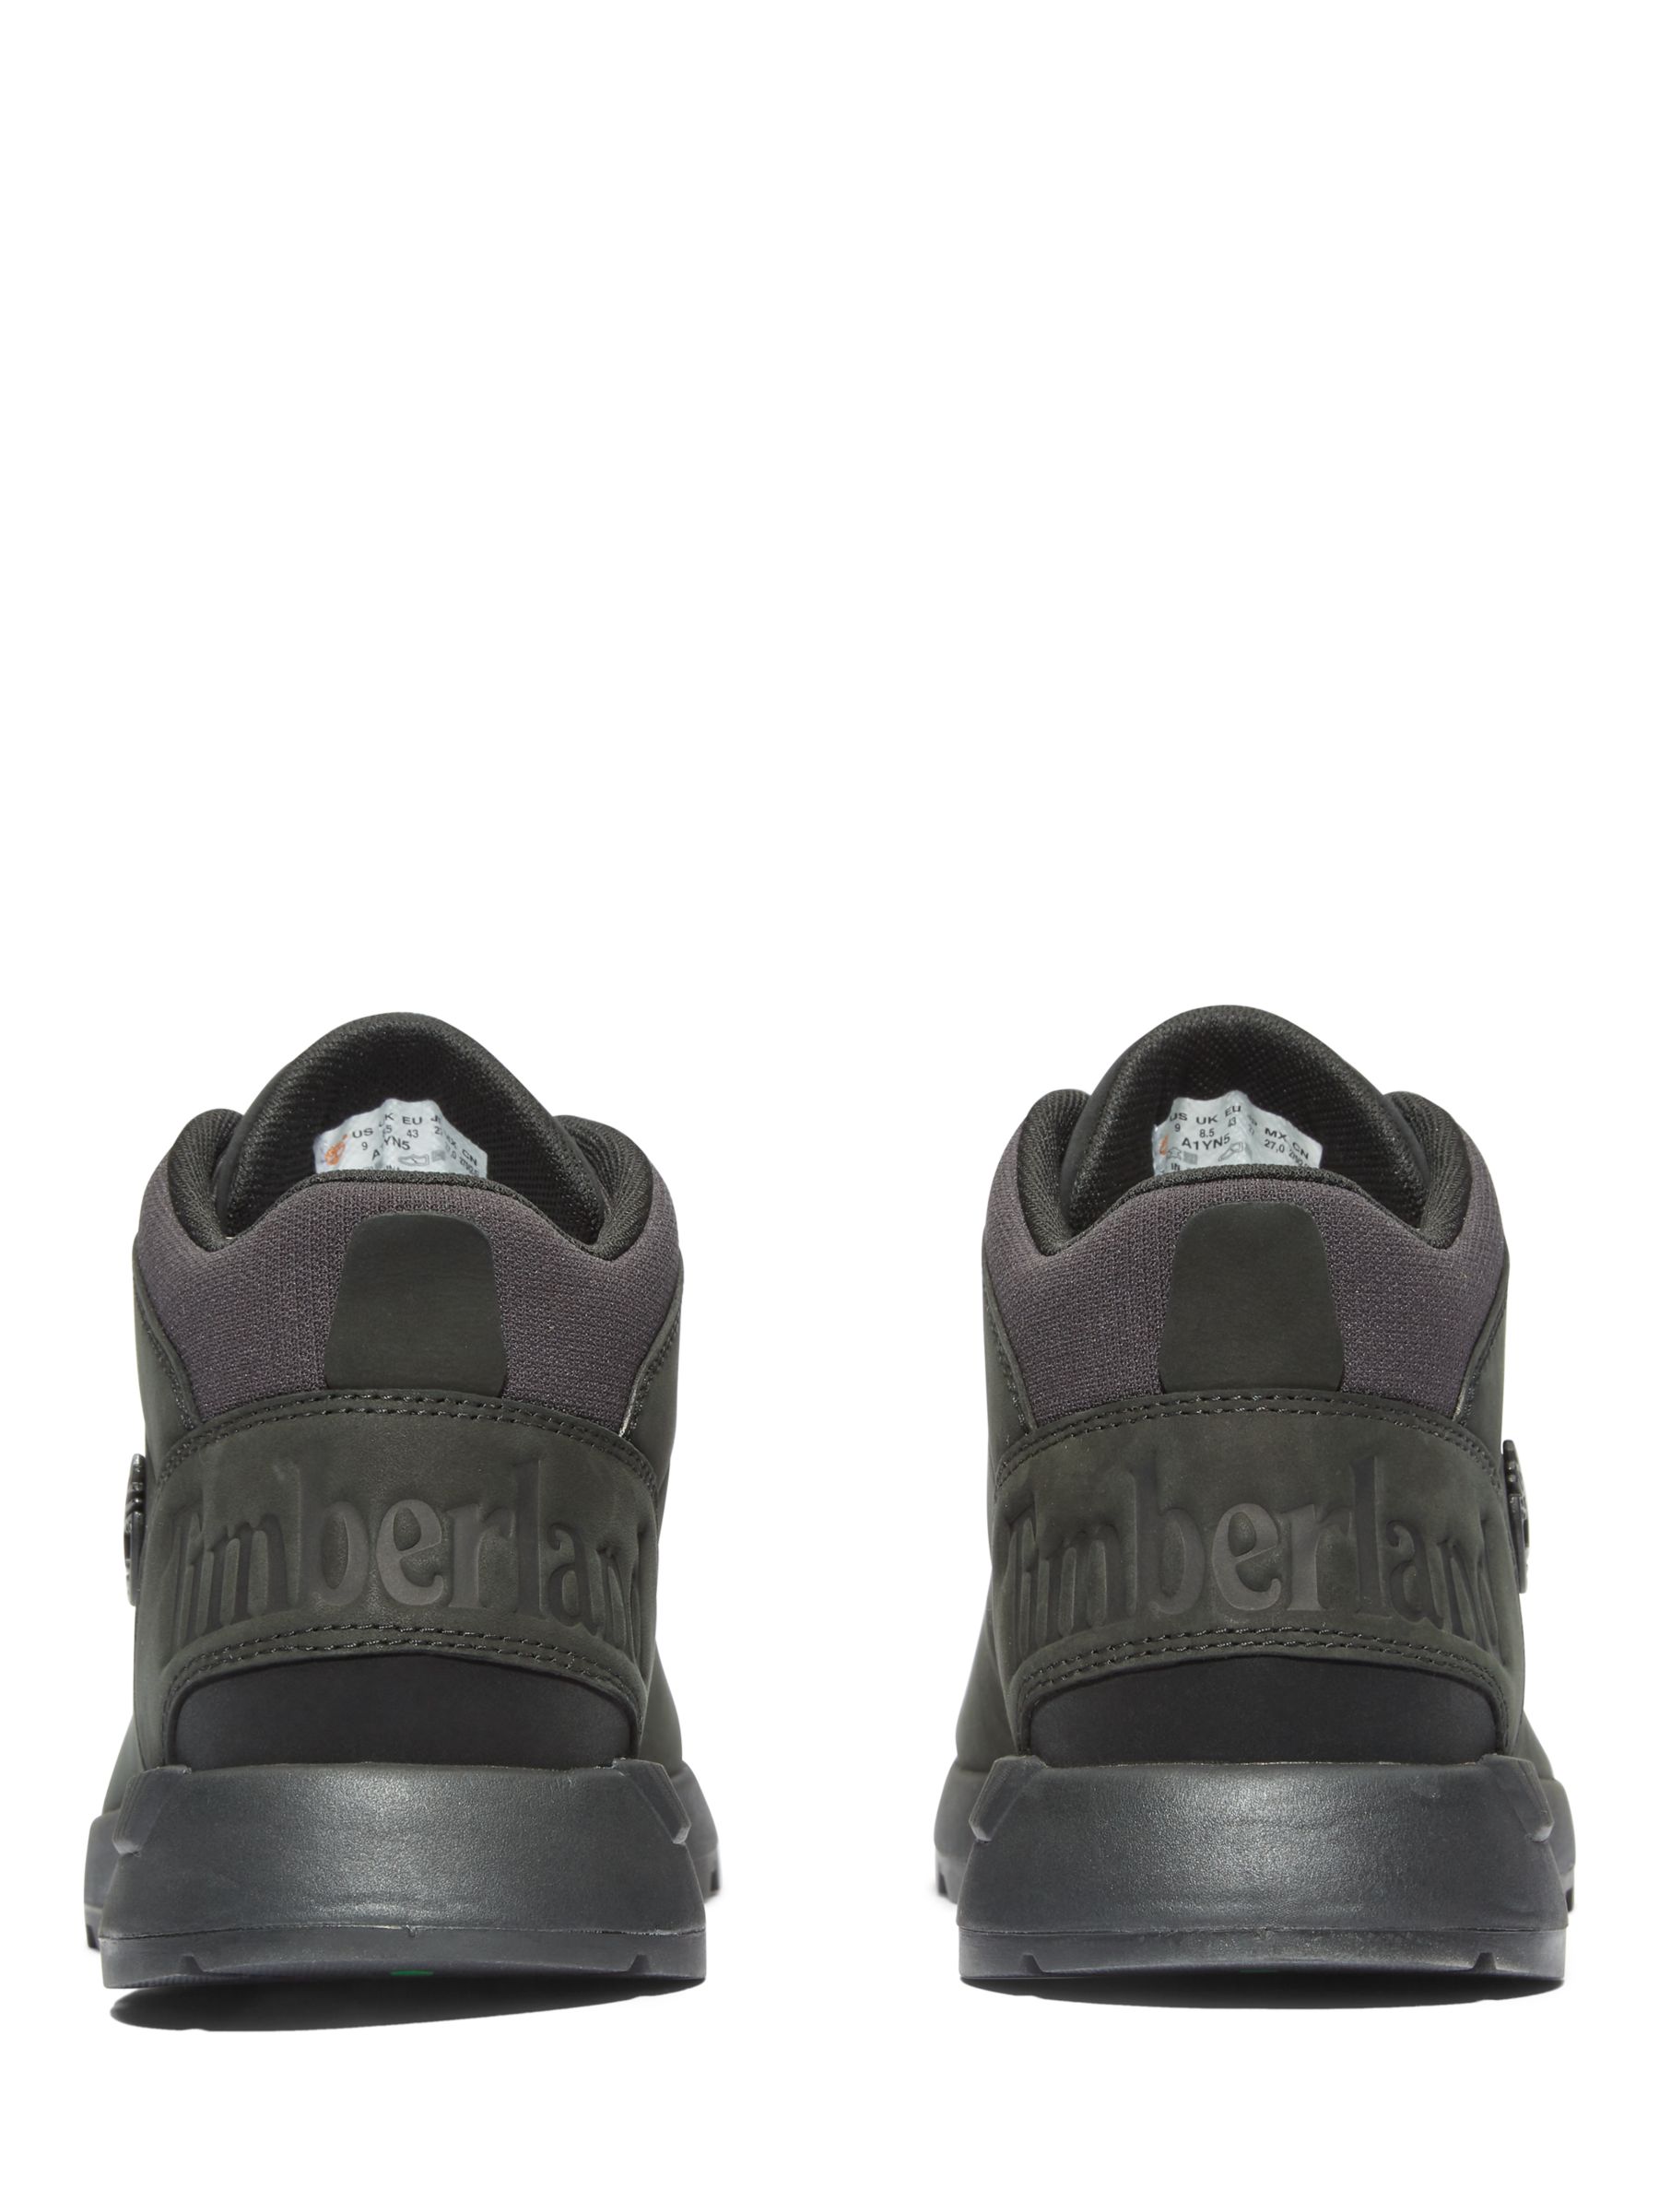 Timberland Sprint Trekker Leather Boots, Black, 9